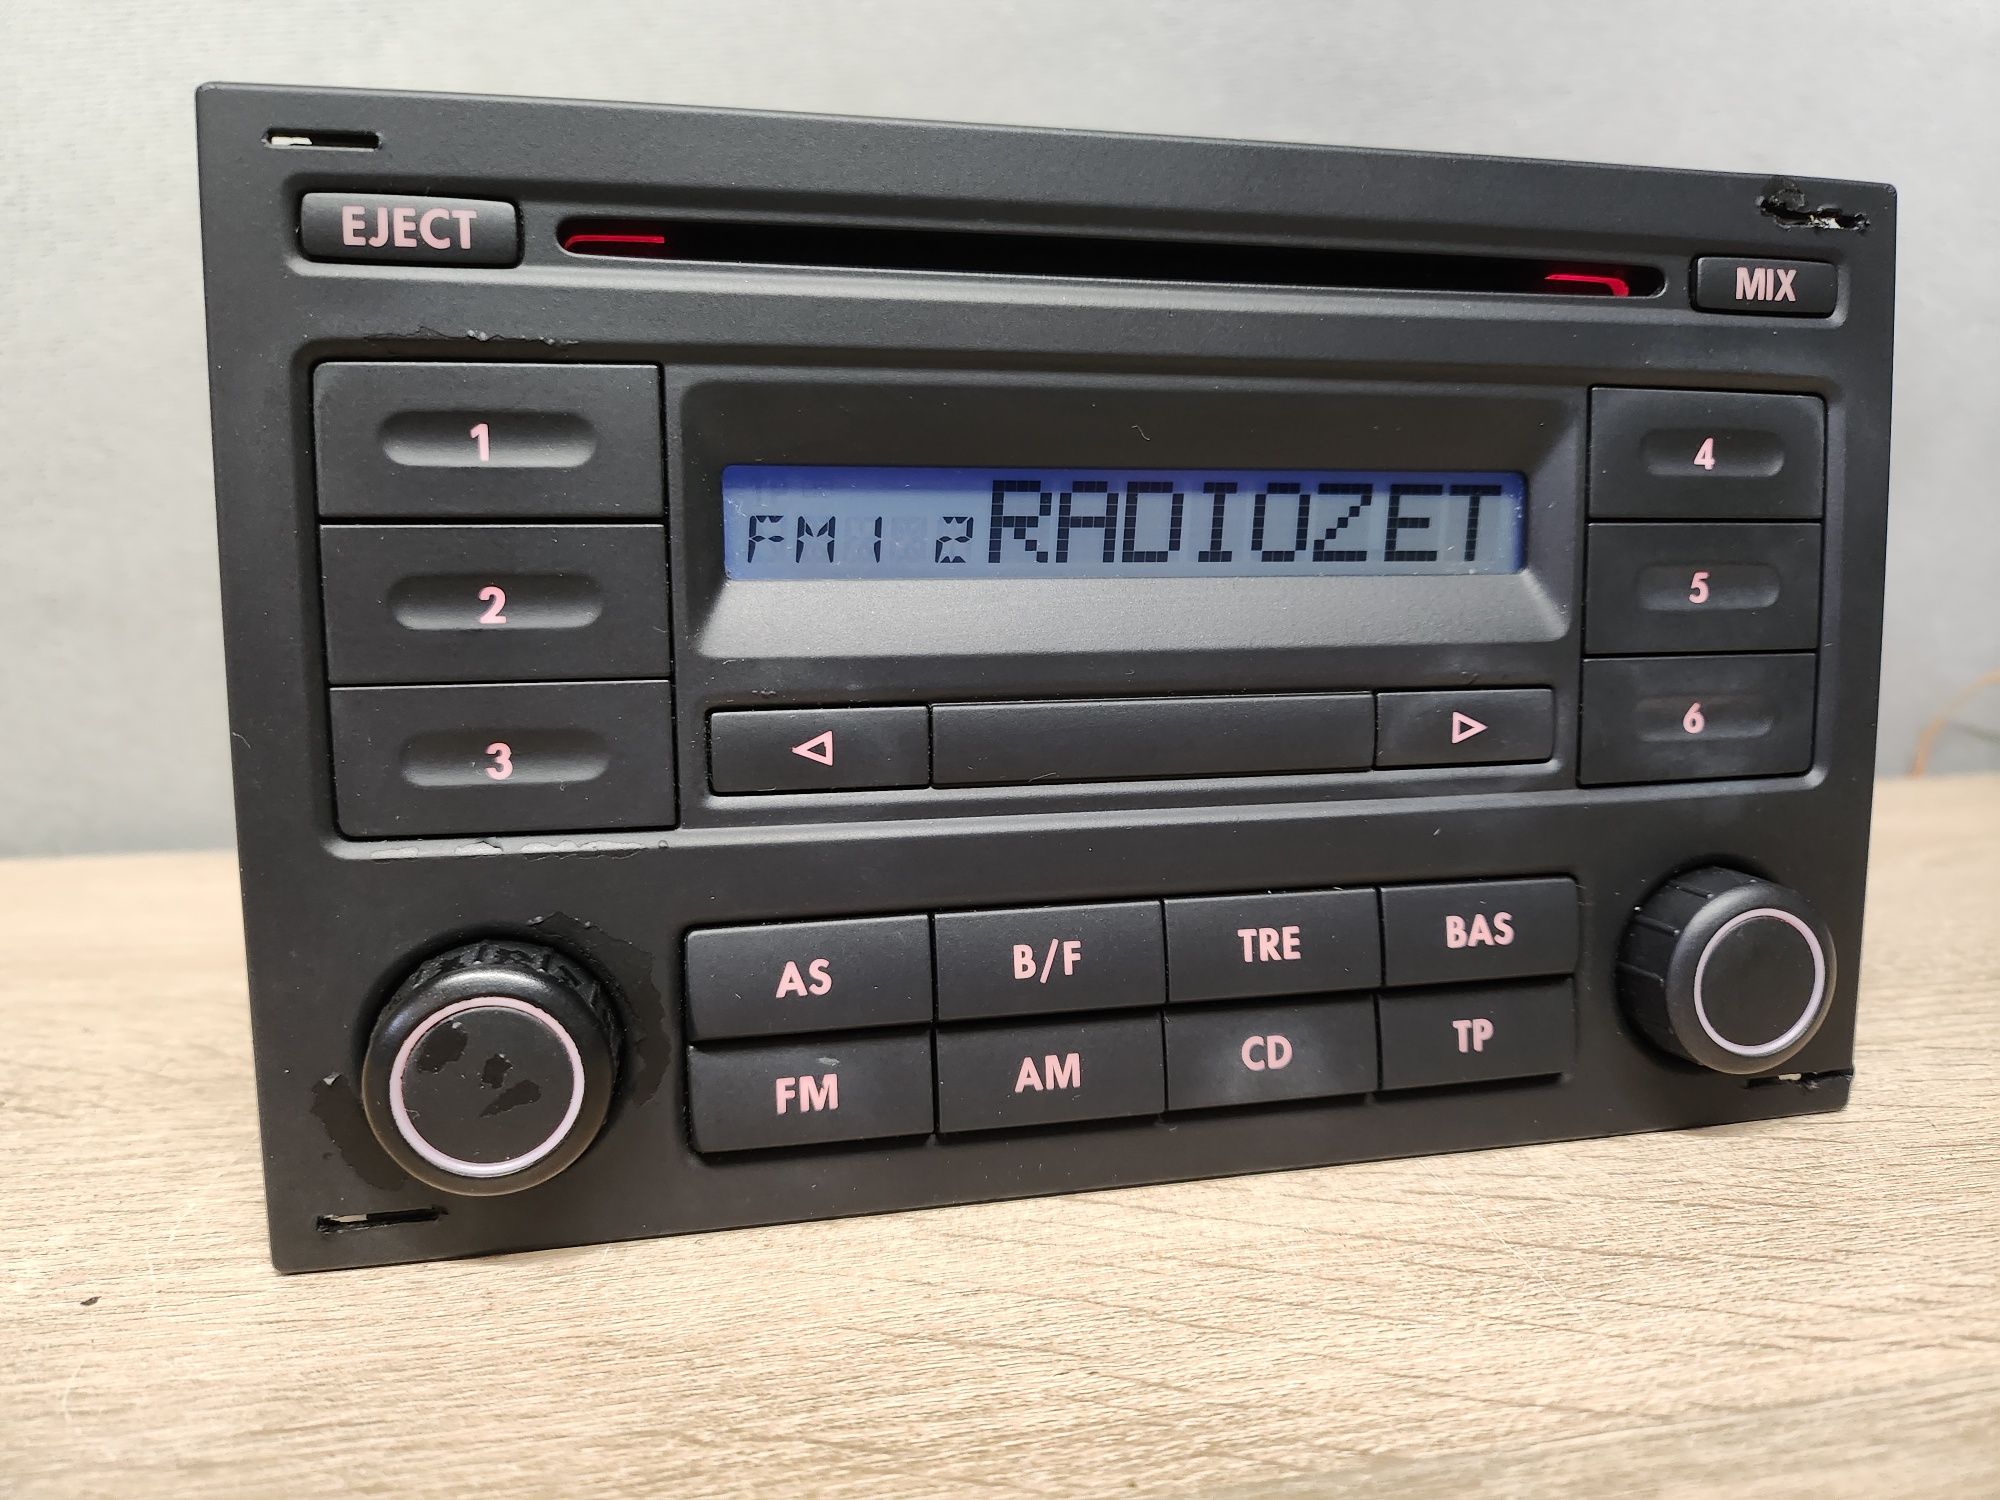 Radio samochodowe Volkswagen VW RCD200 CD FOX Lupo T5 Polo + kod